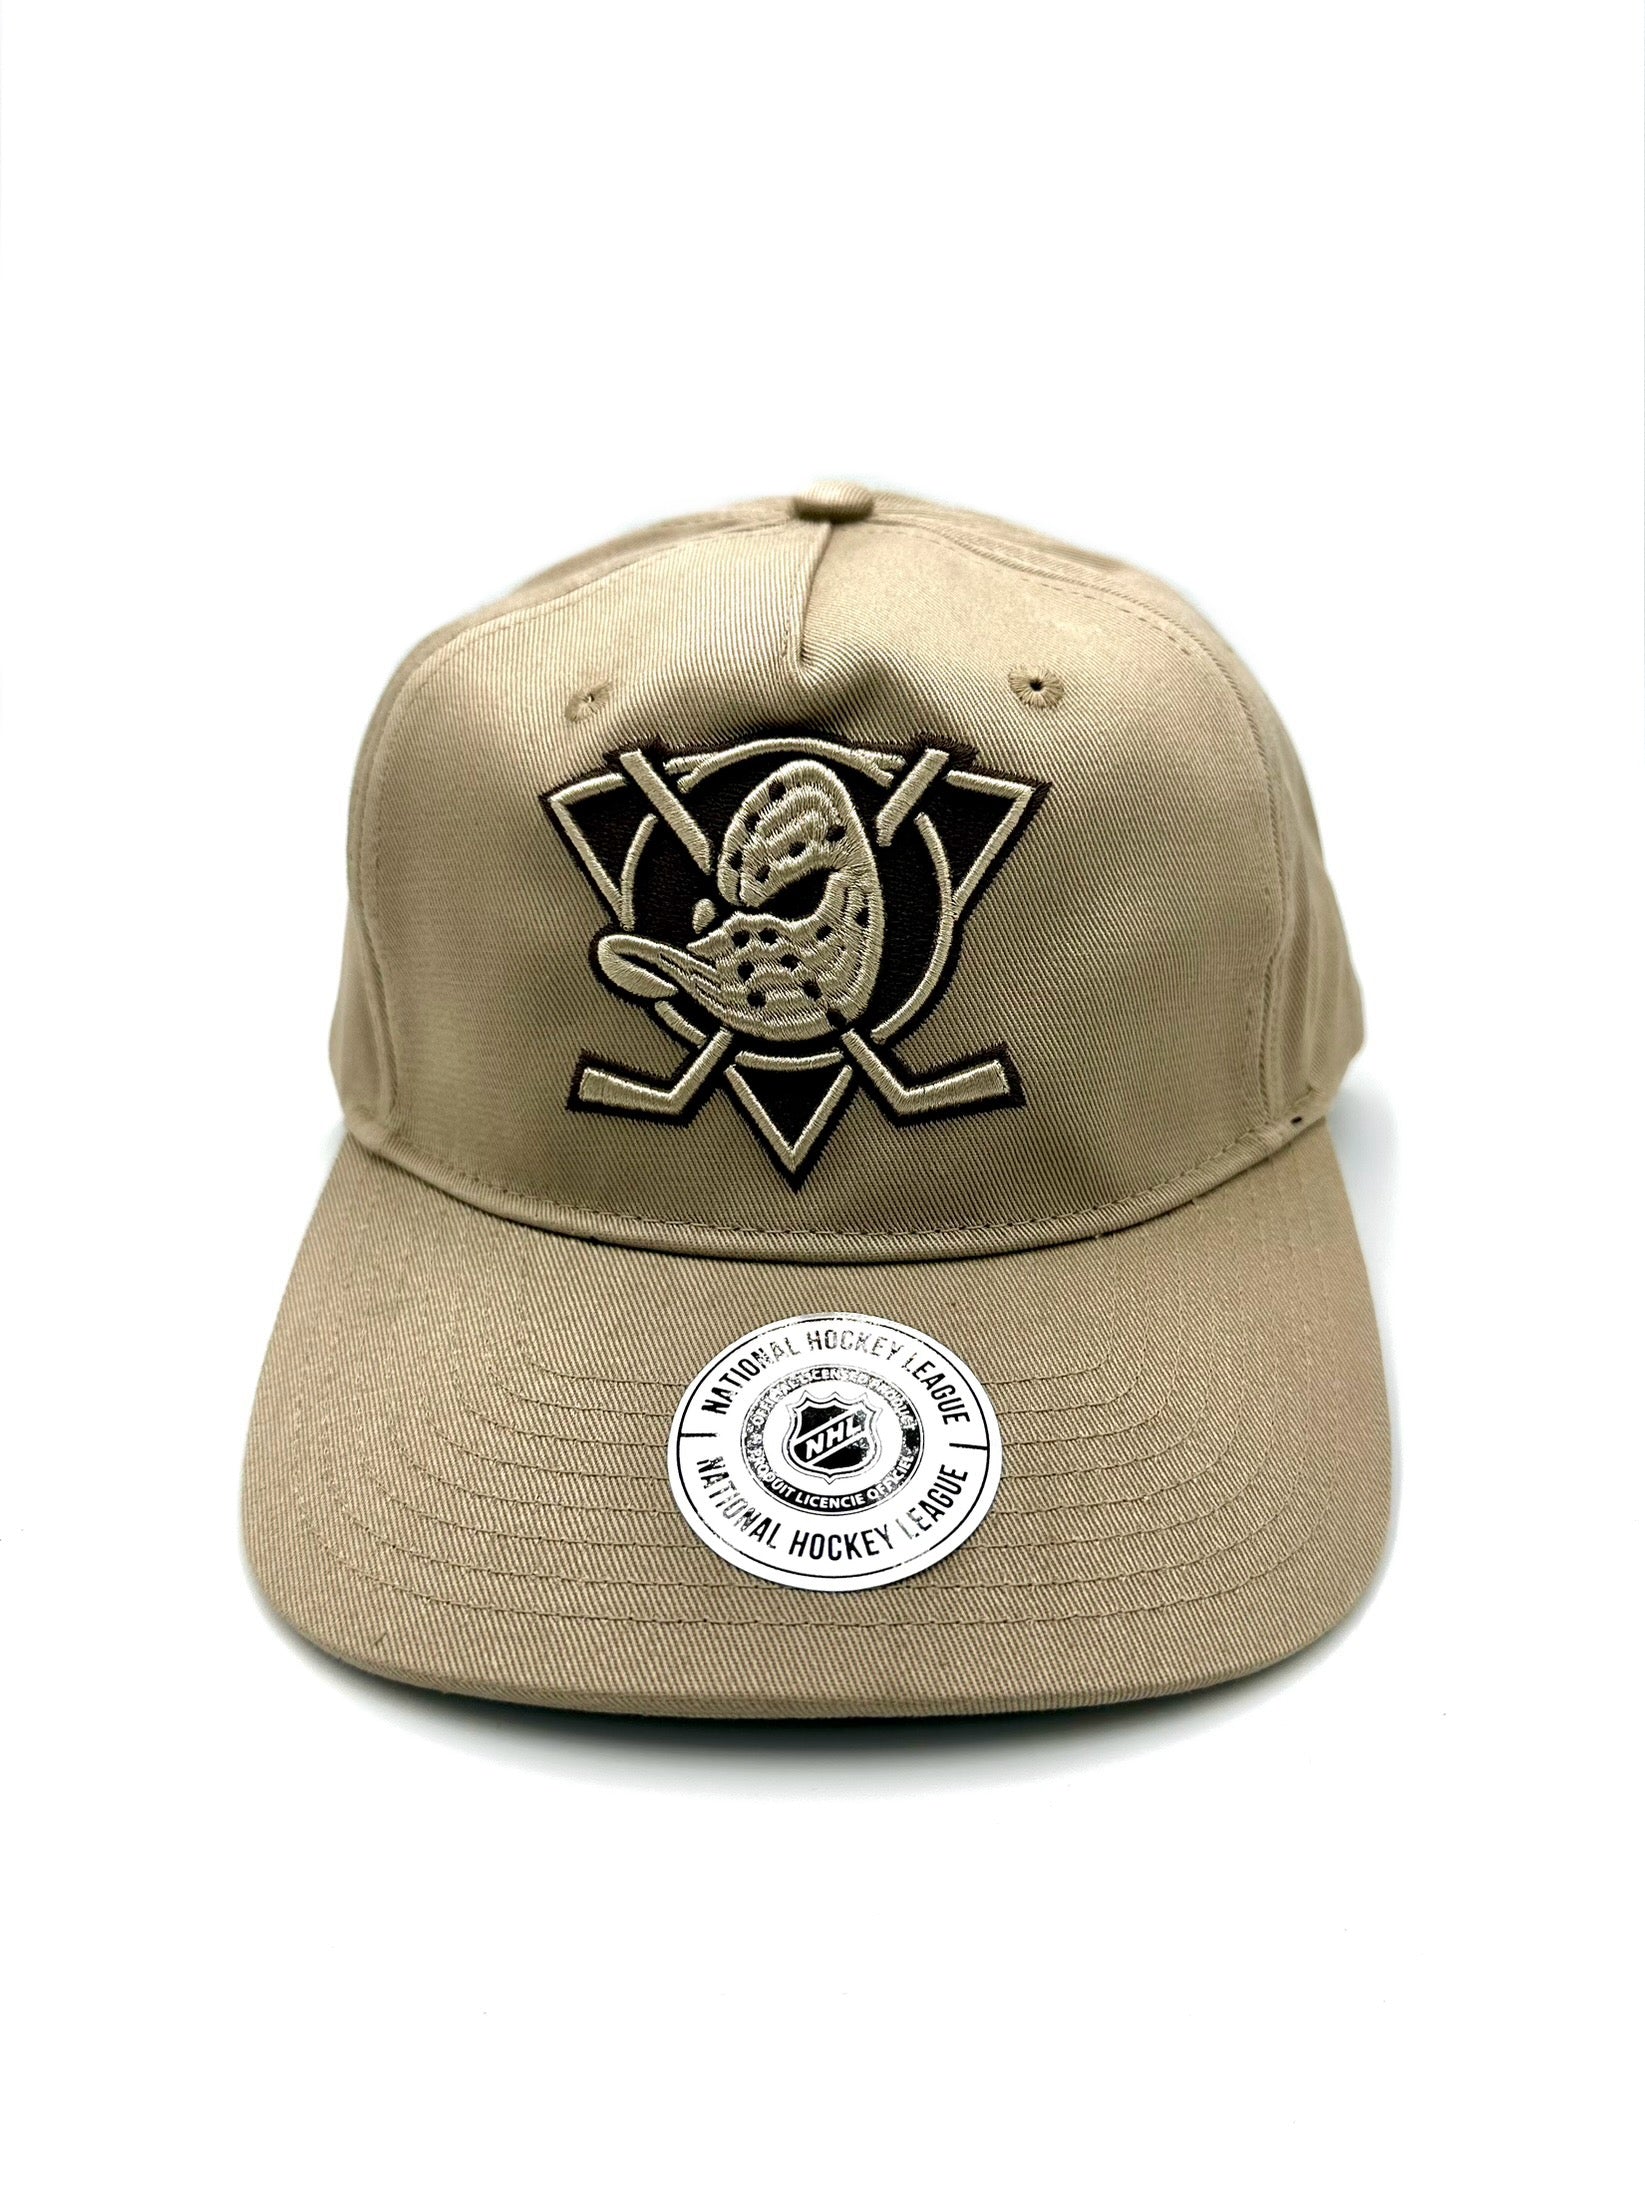 Anaheim Ducks Hat - Desert Taupe Tonal Stark Deadstock NHL Snapback Cap - Majestic Athletic